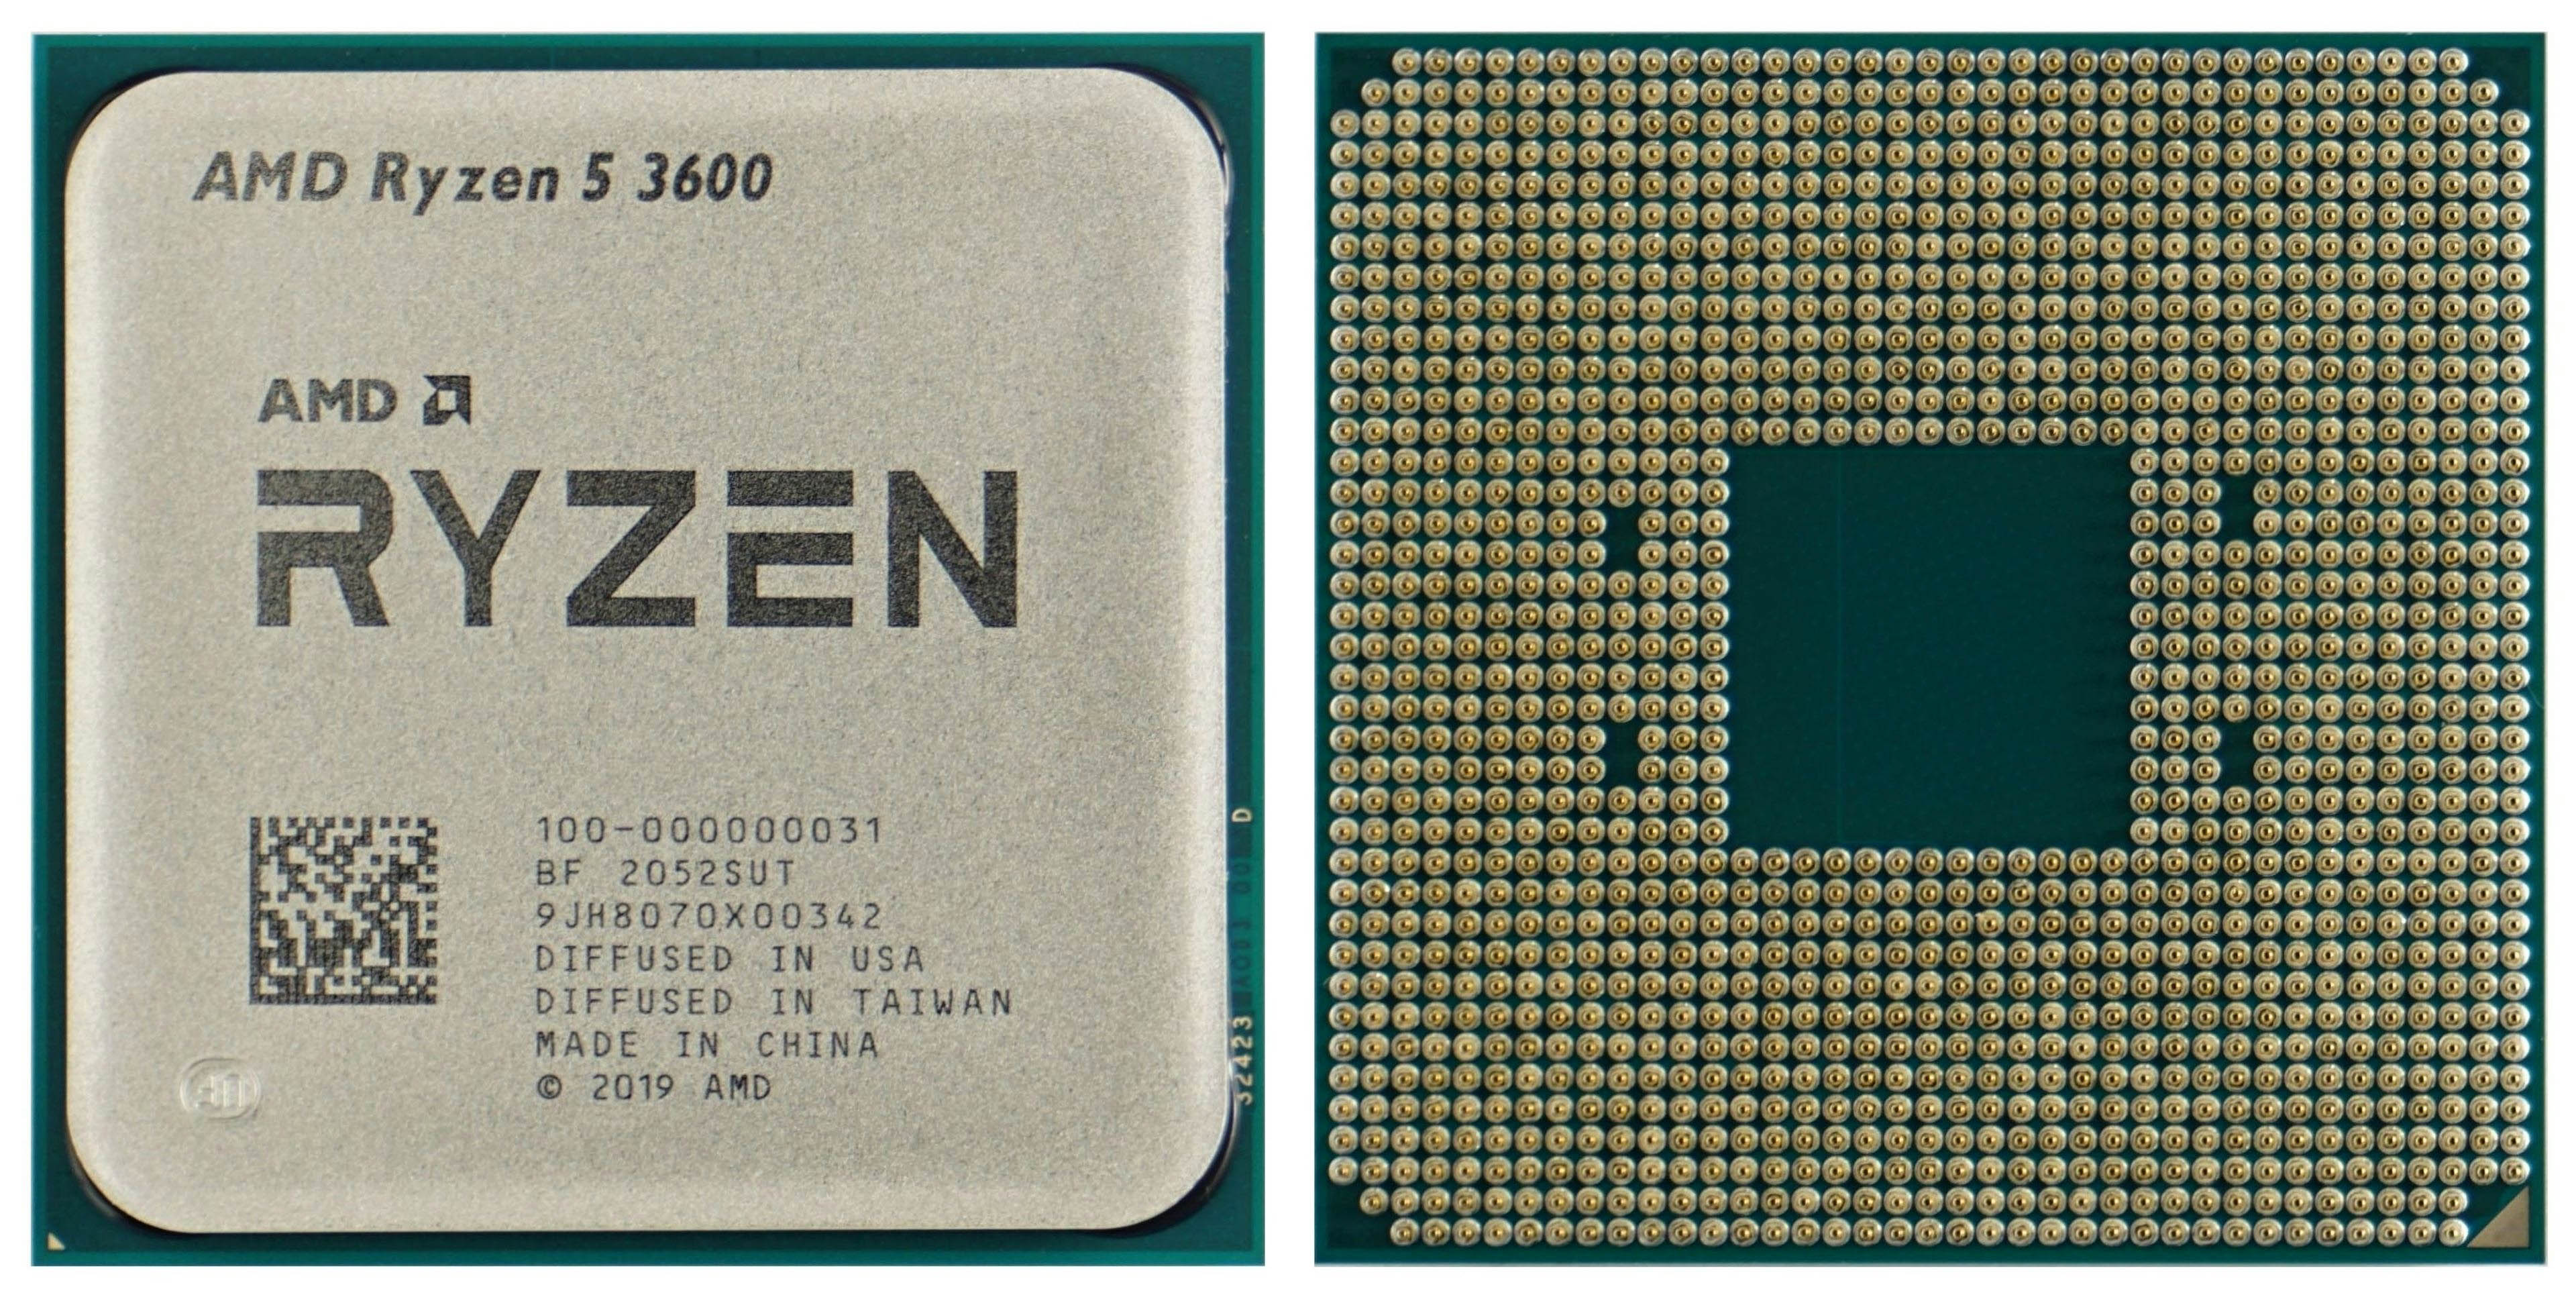 Idioot gemak balans AMD Ryzen 5 3600: Older bestseller head-to-head with new CPUs -  HWCooling.net